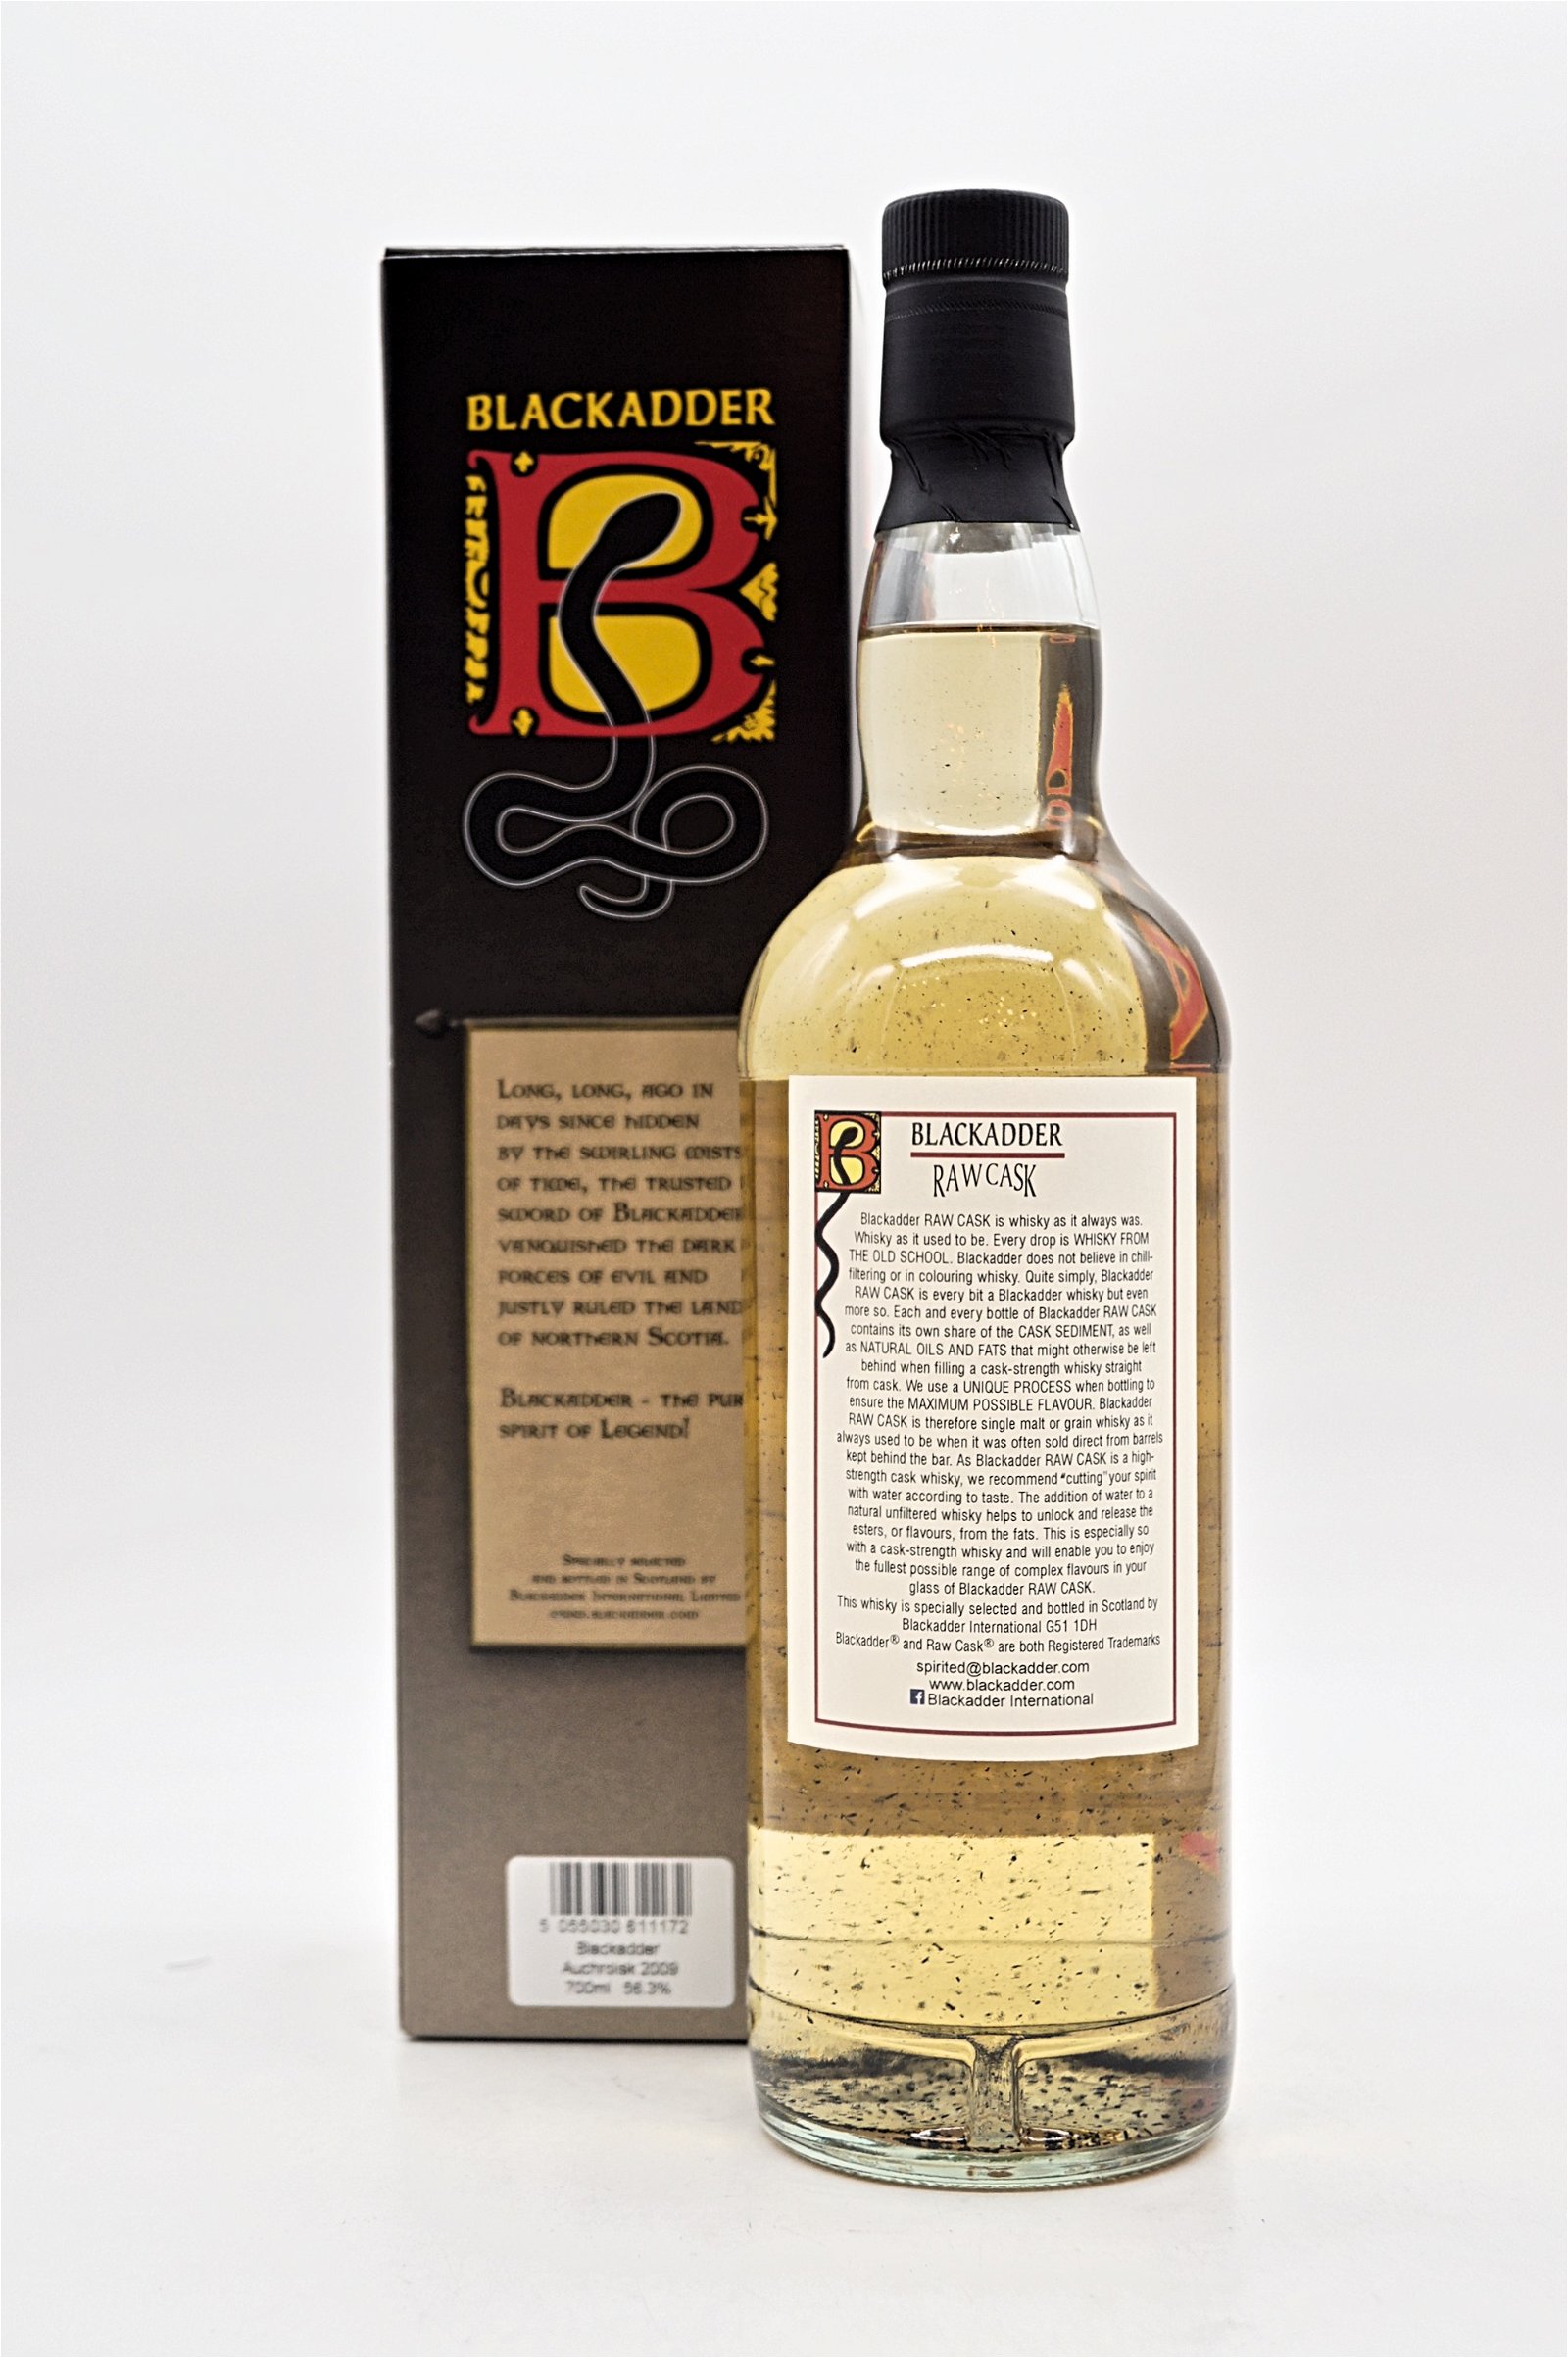 Blackadder 11 Jahre Auchroisk Raw Cask No 804341 Speyside Single Malt Scotch Whisky